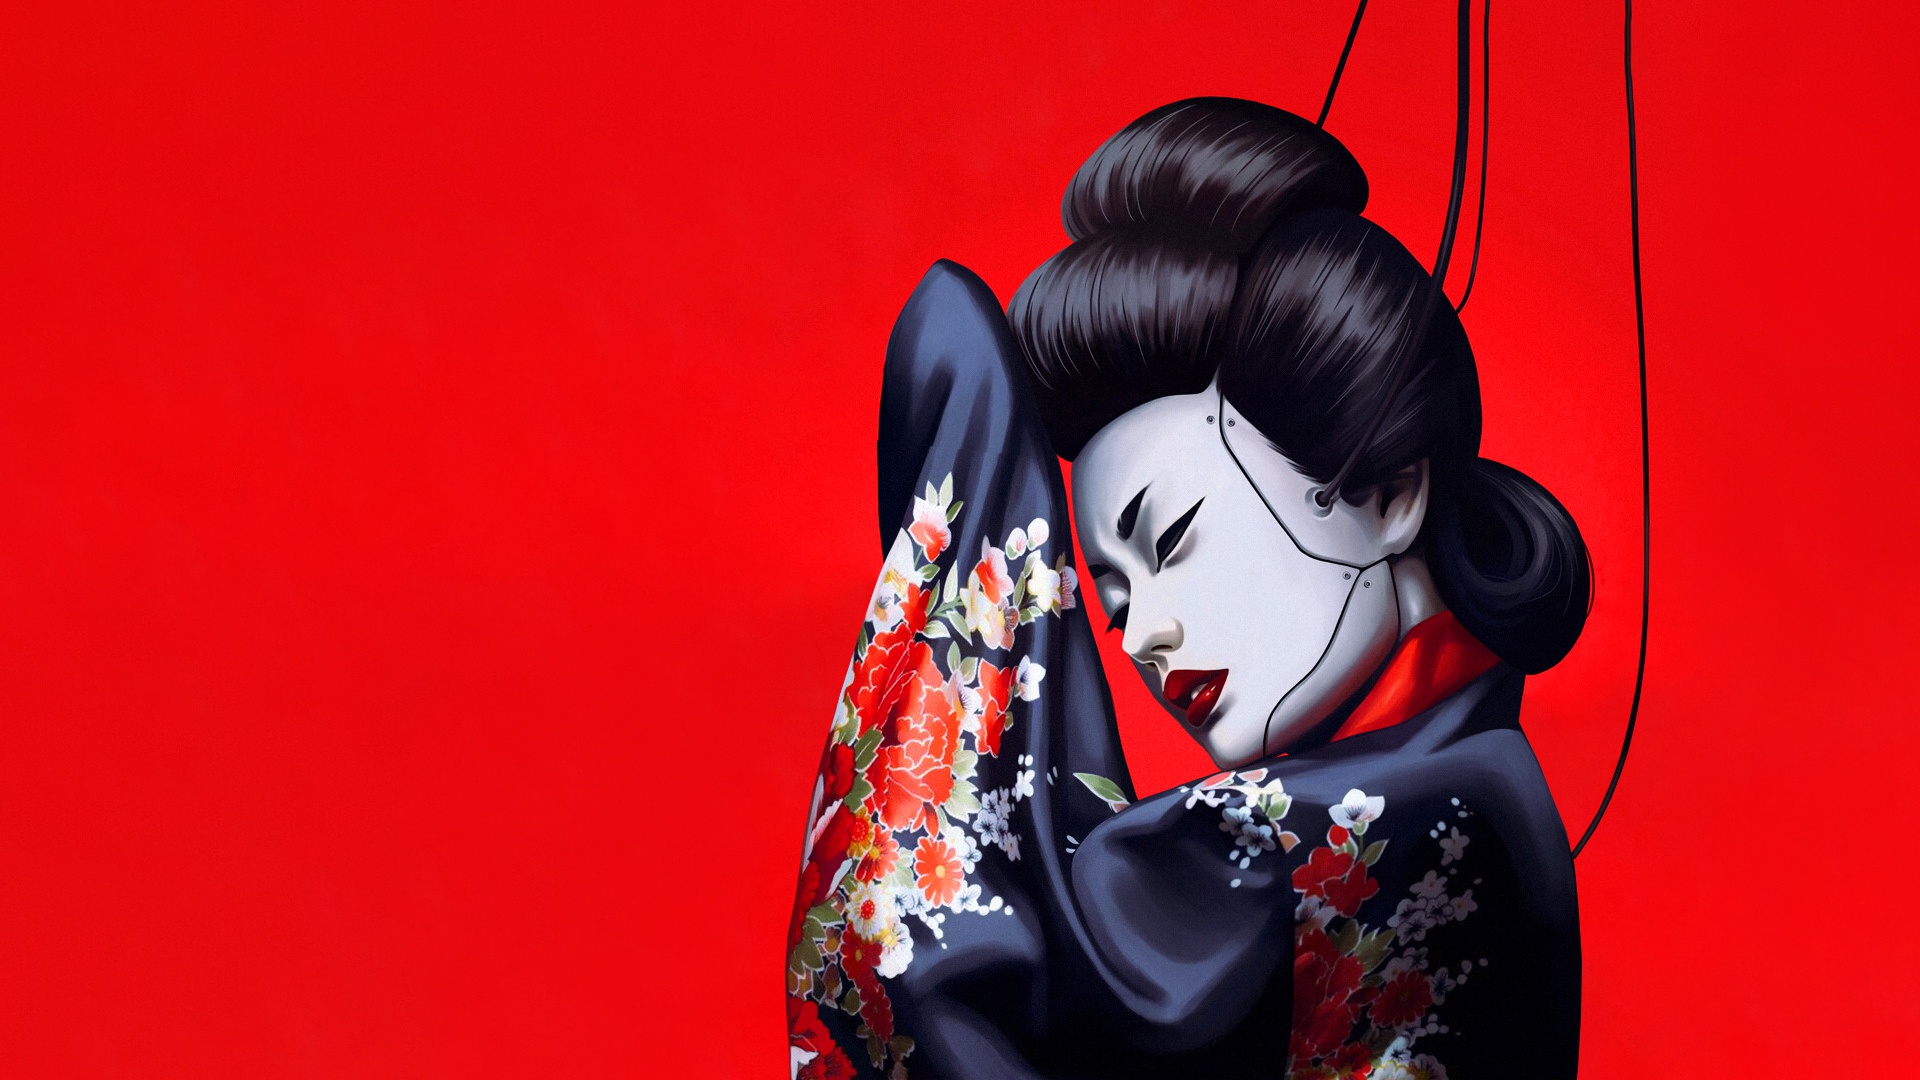 General 1920x1080 Asian red background futuristic artwork face simple background dark hair geisha red